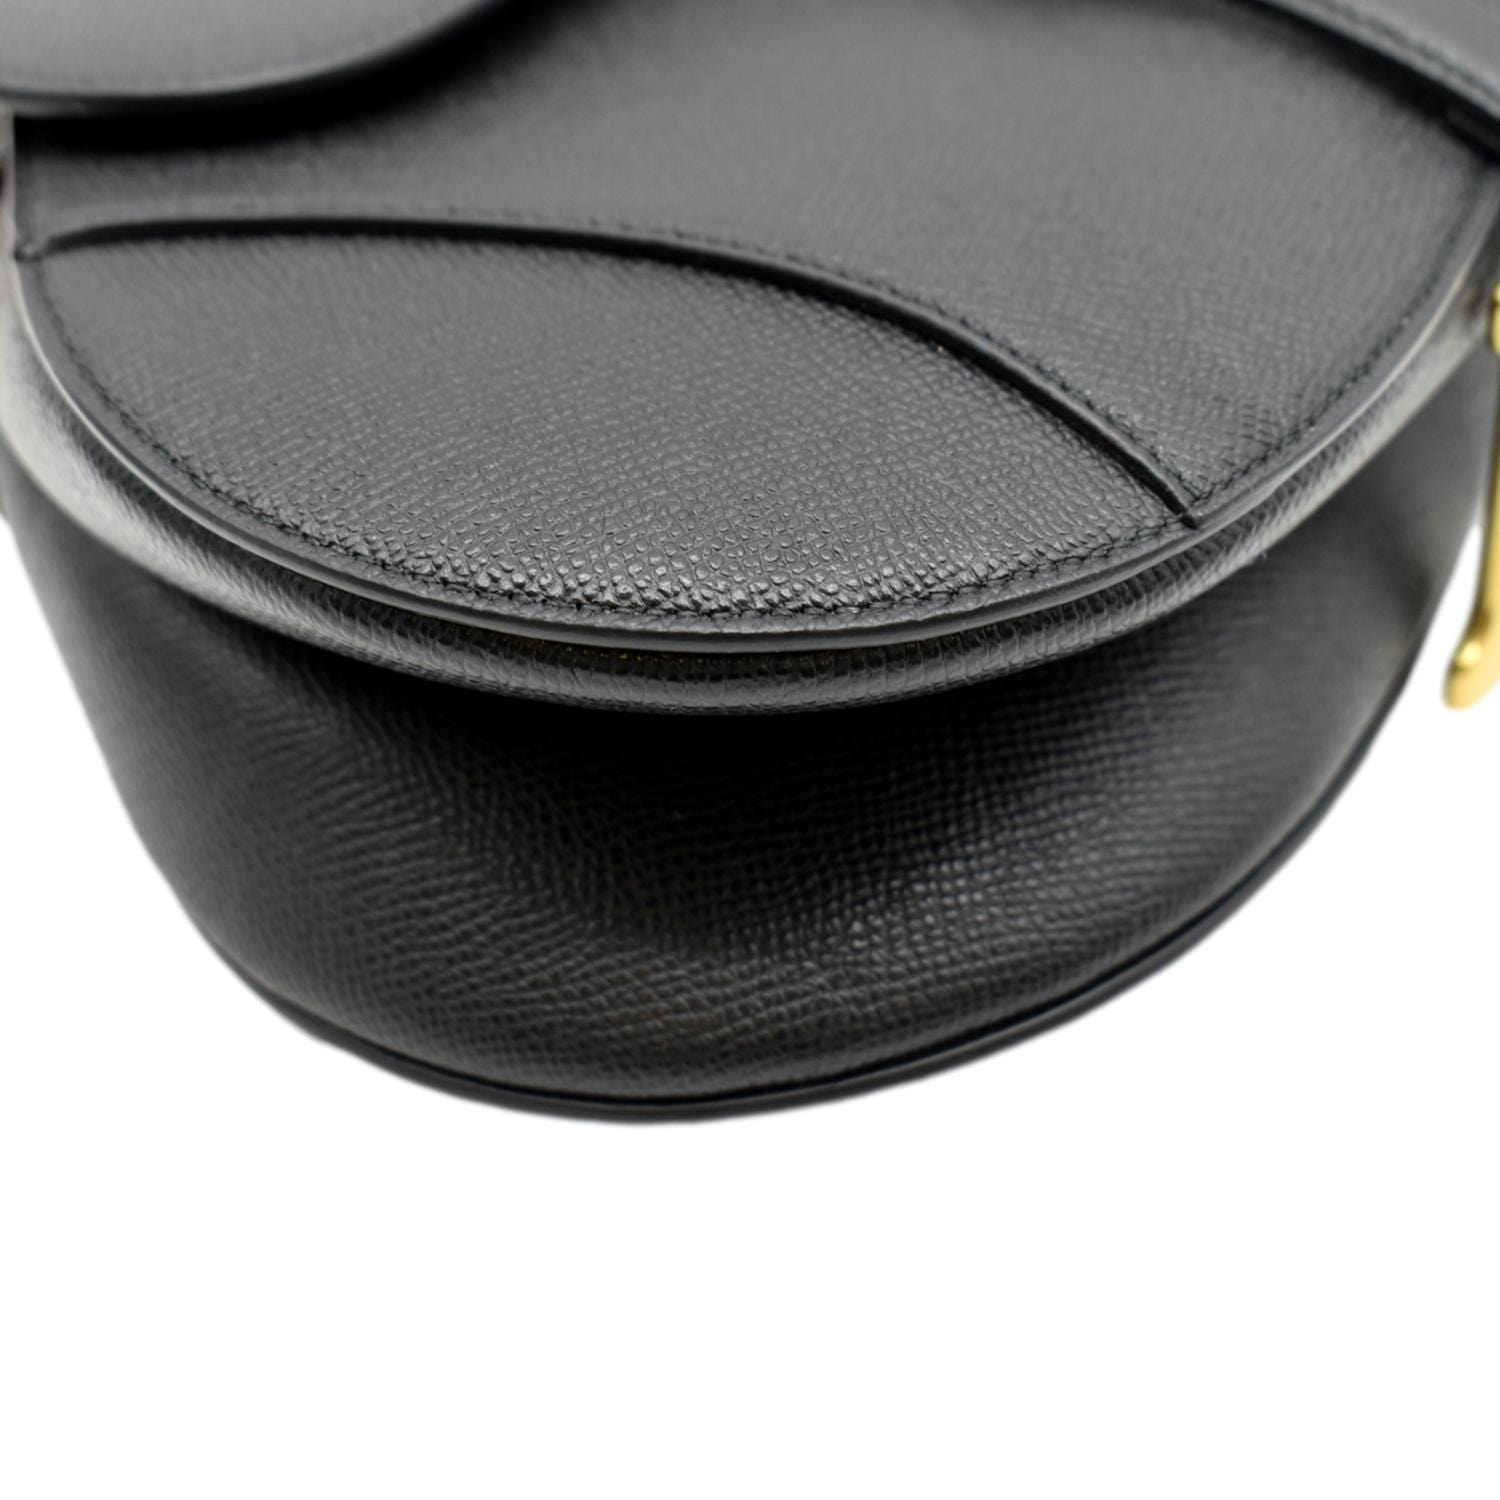 Dior - Mini Saddle Bag with Strap Black Grained Calfskin - Men